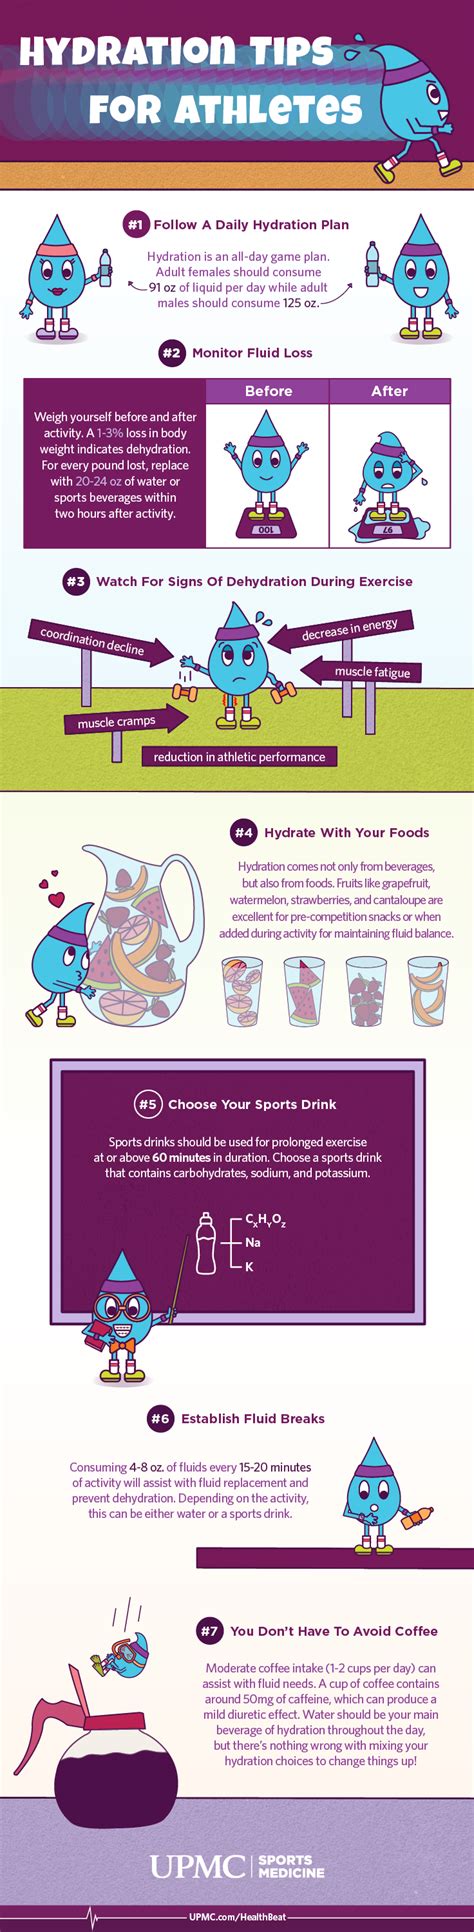 7 Hydration Tips For Athletes Upmc Healthbeat Eu Vietnam Business